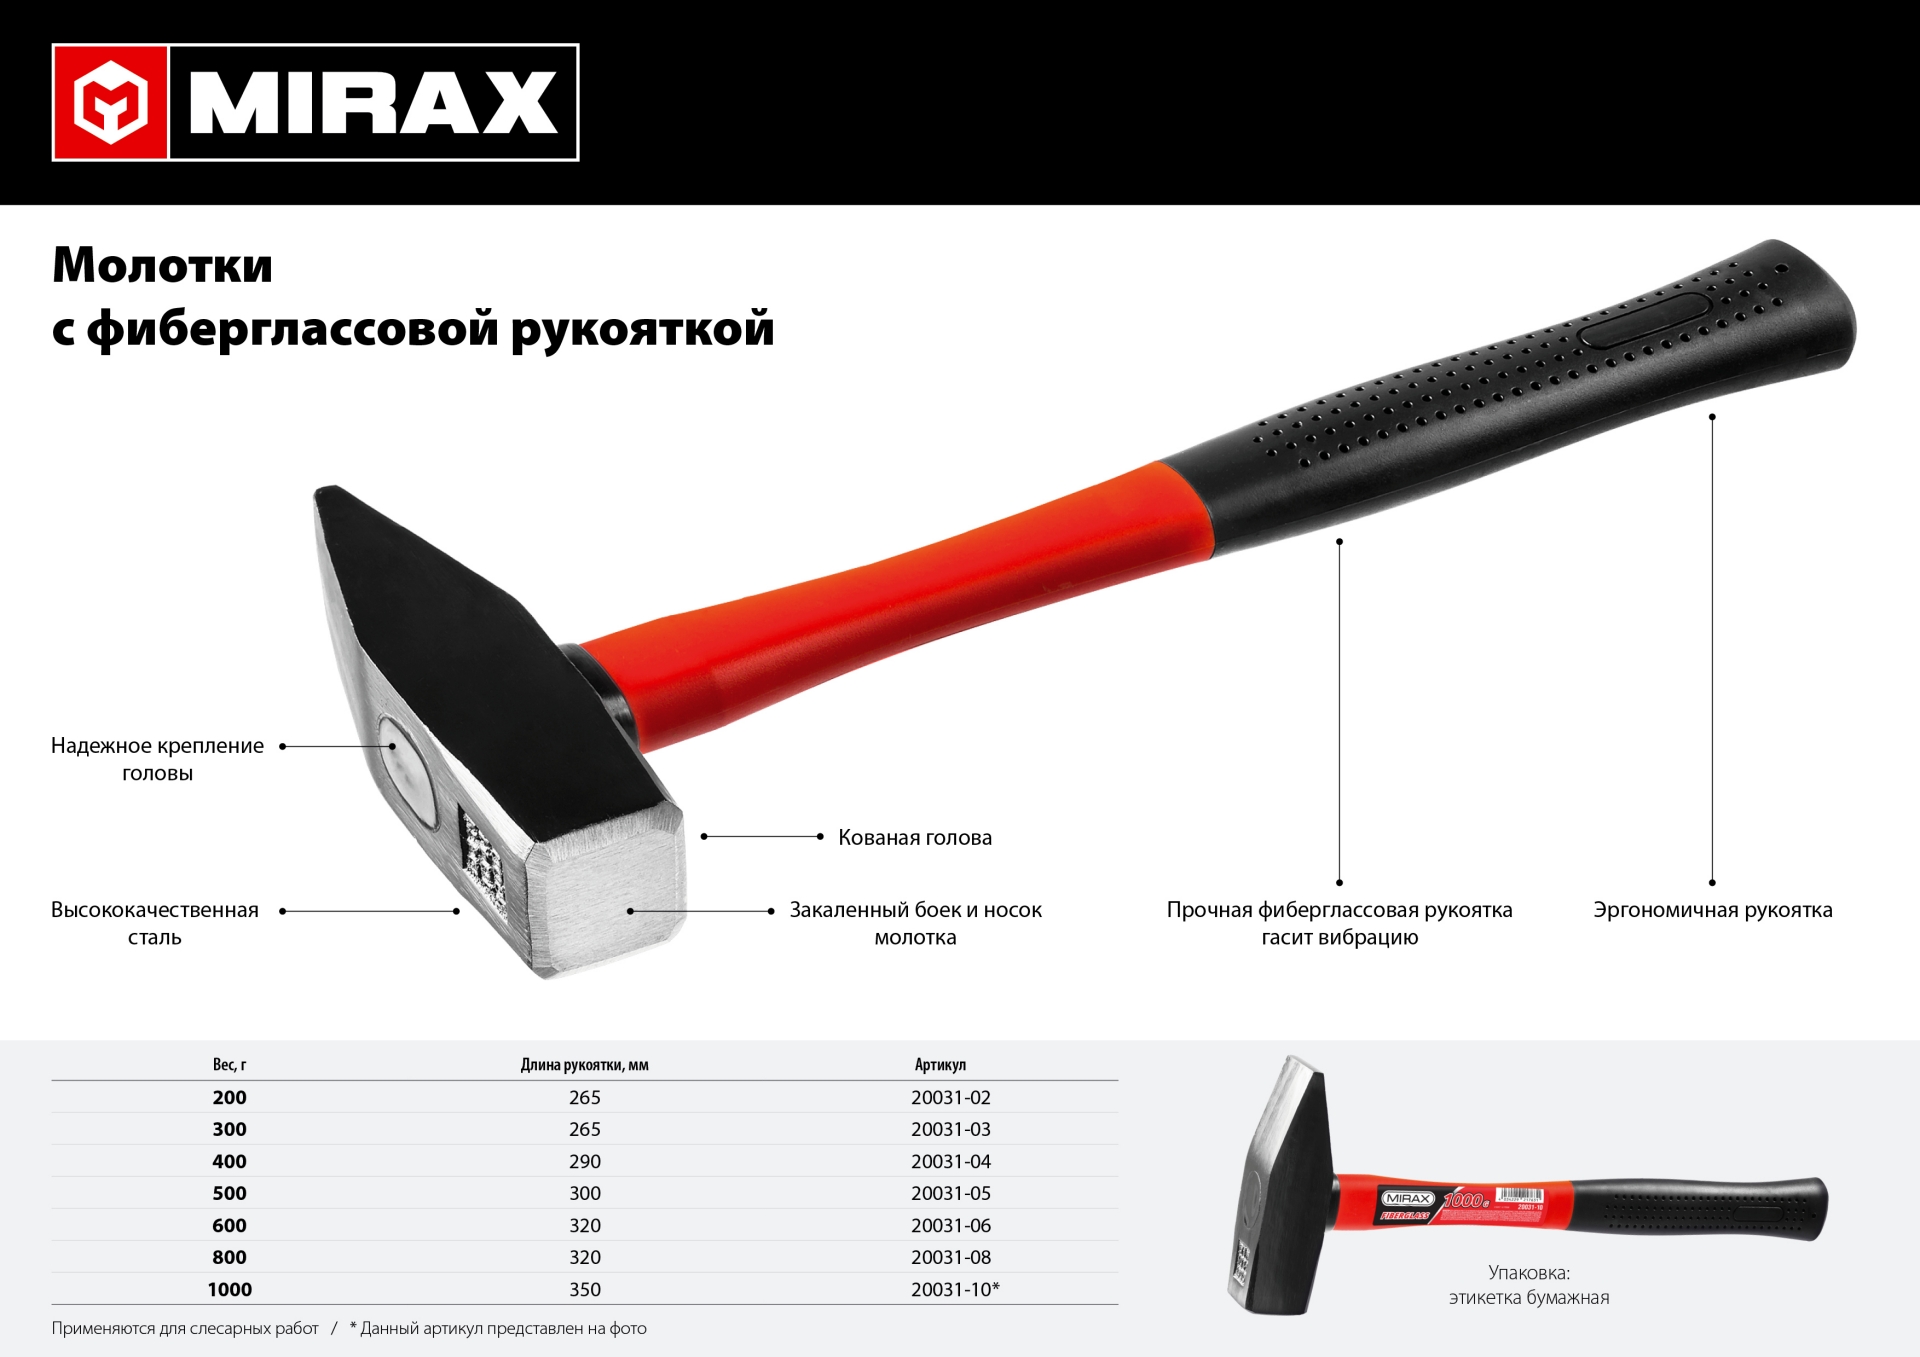 MIRAX 800, Молоток (20031-08)